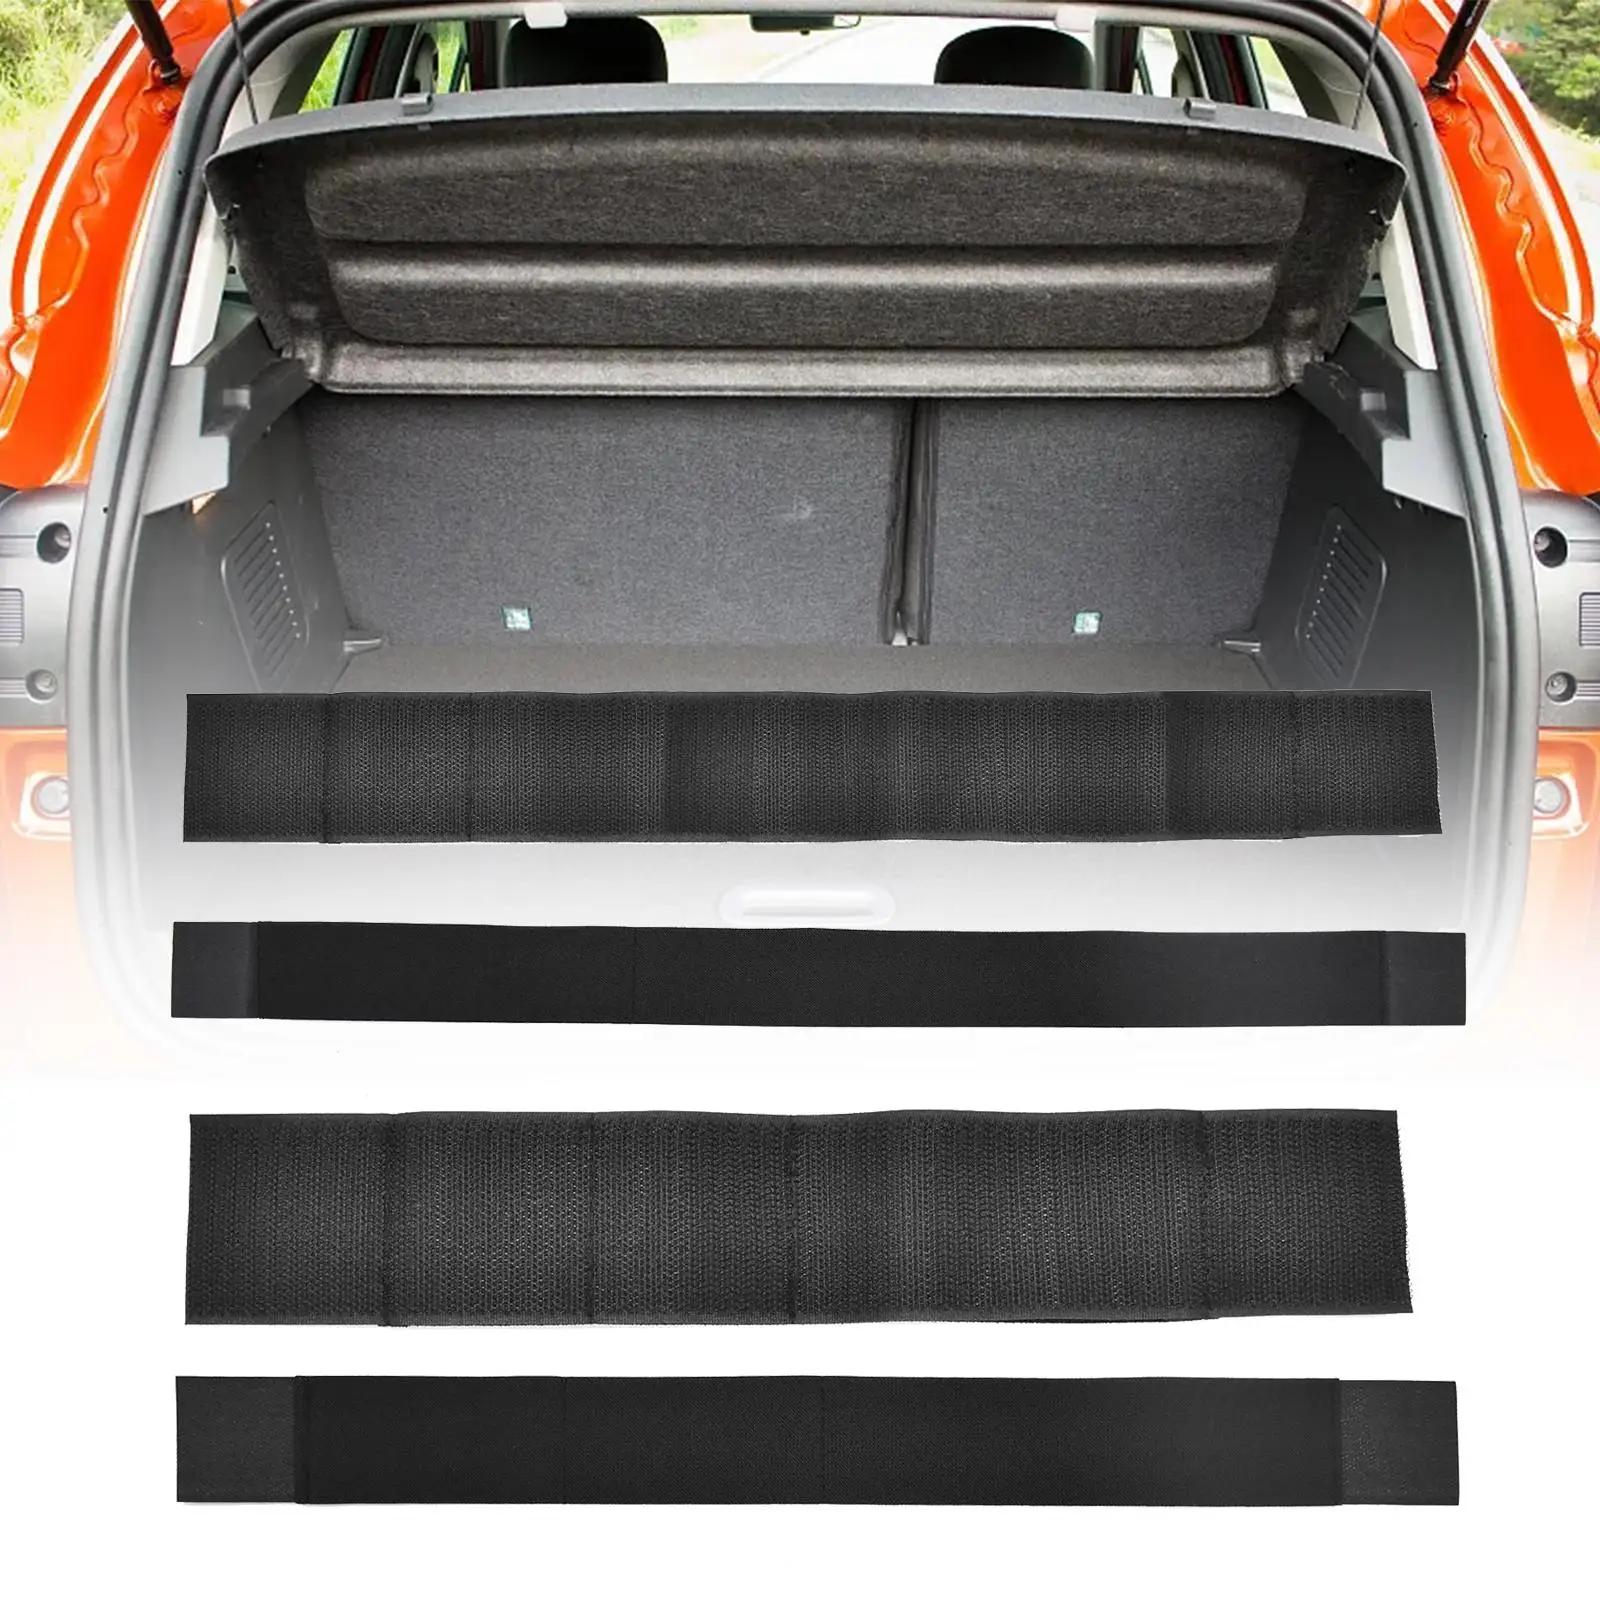 4 Pieces Car Trunk Strap Polyester Organizer Strap for Truck Minivan RV